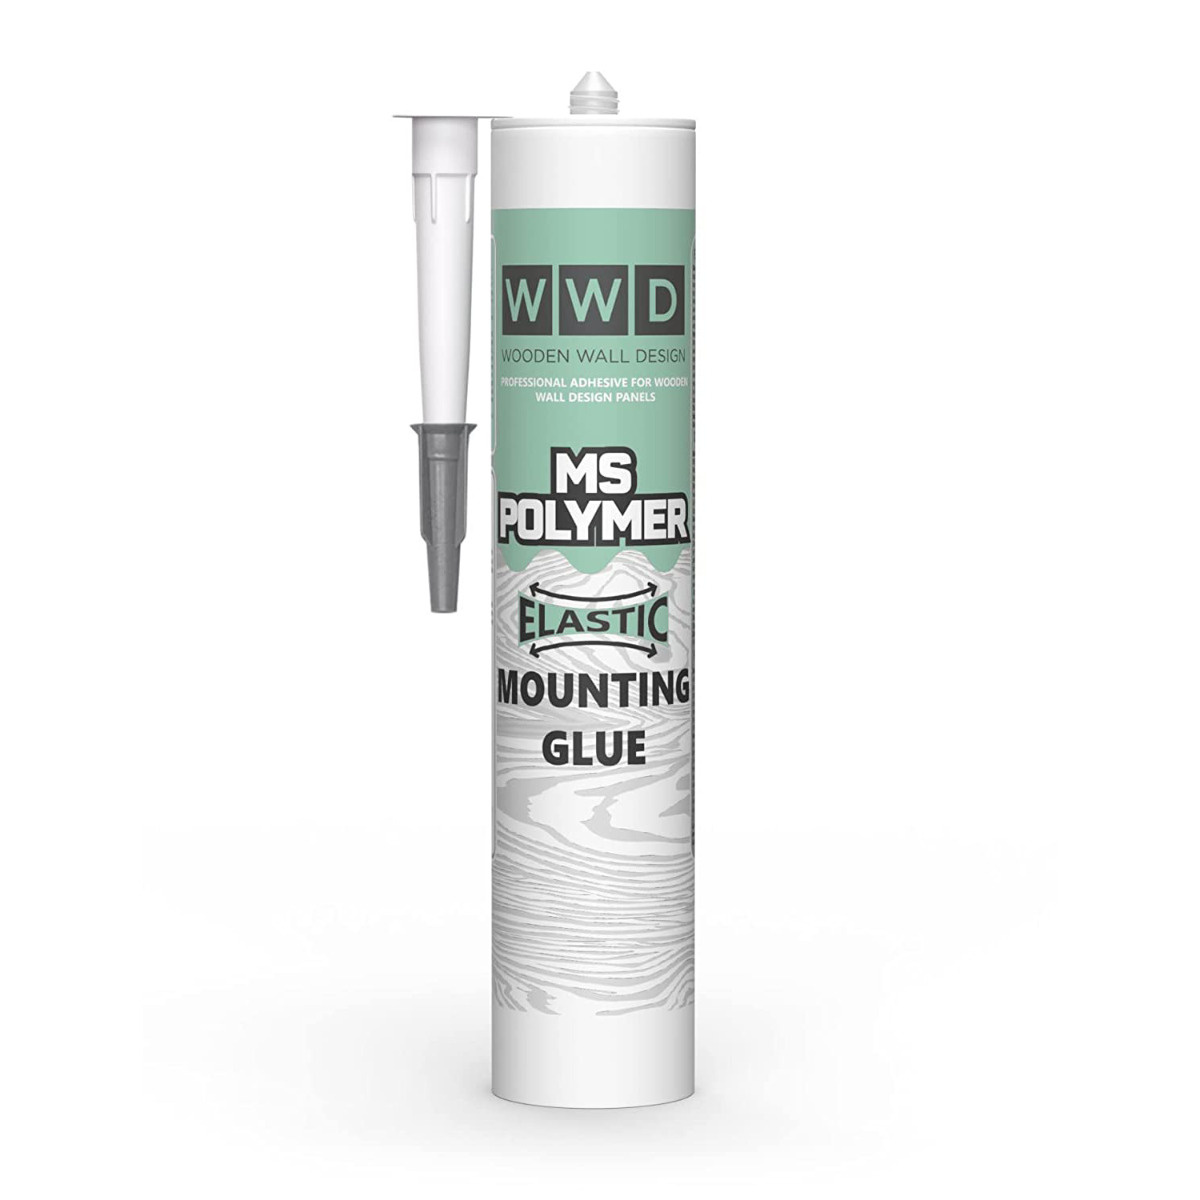 MS Polymer Mounting glue